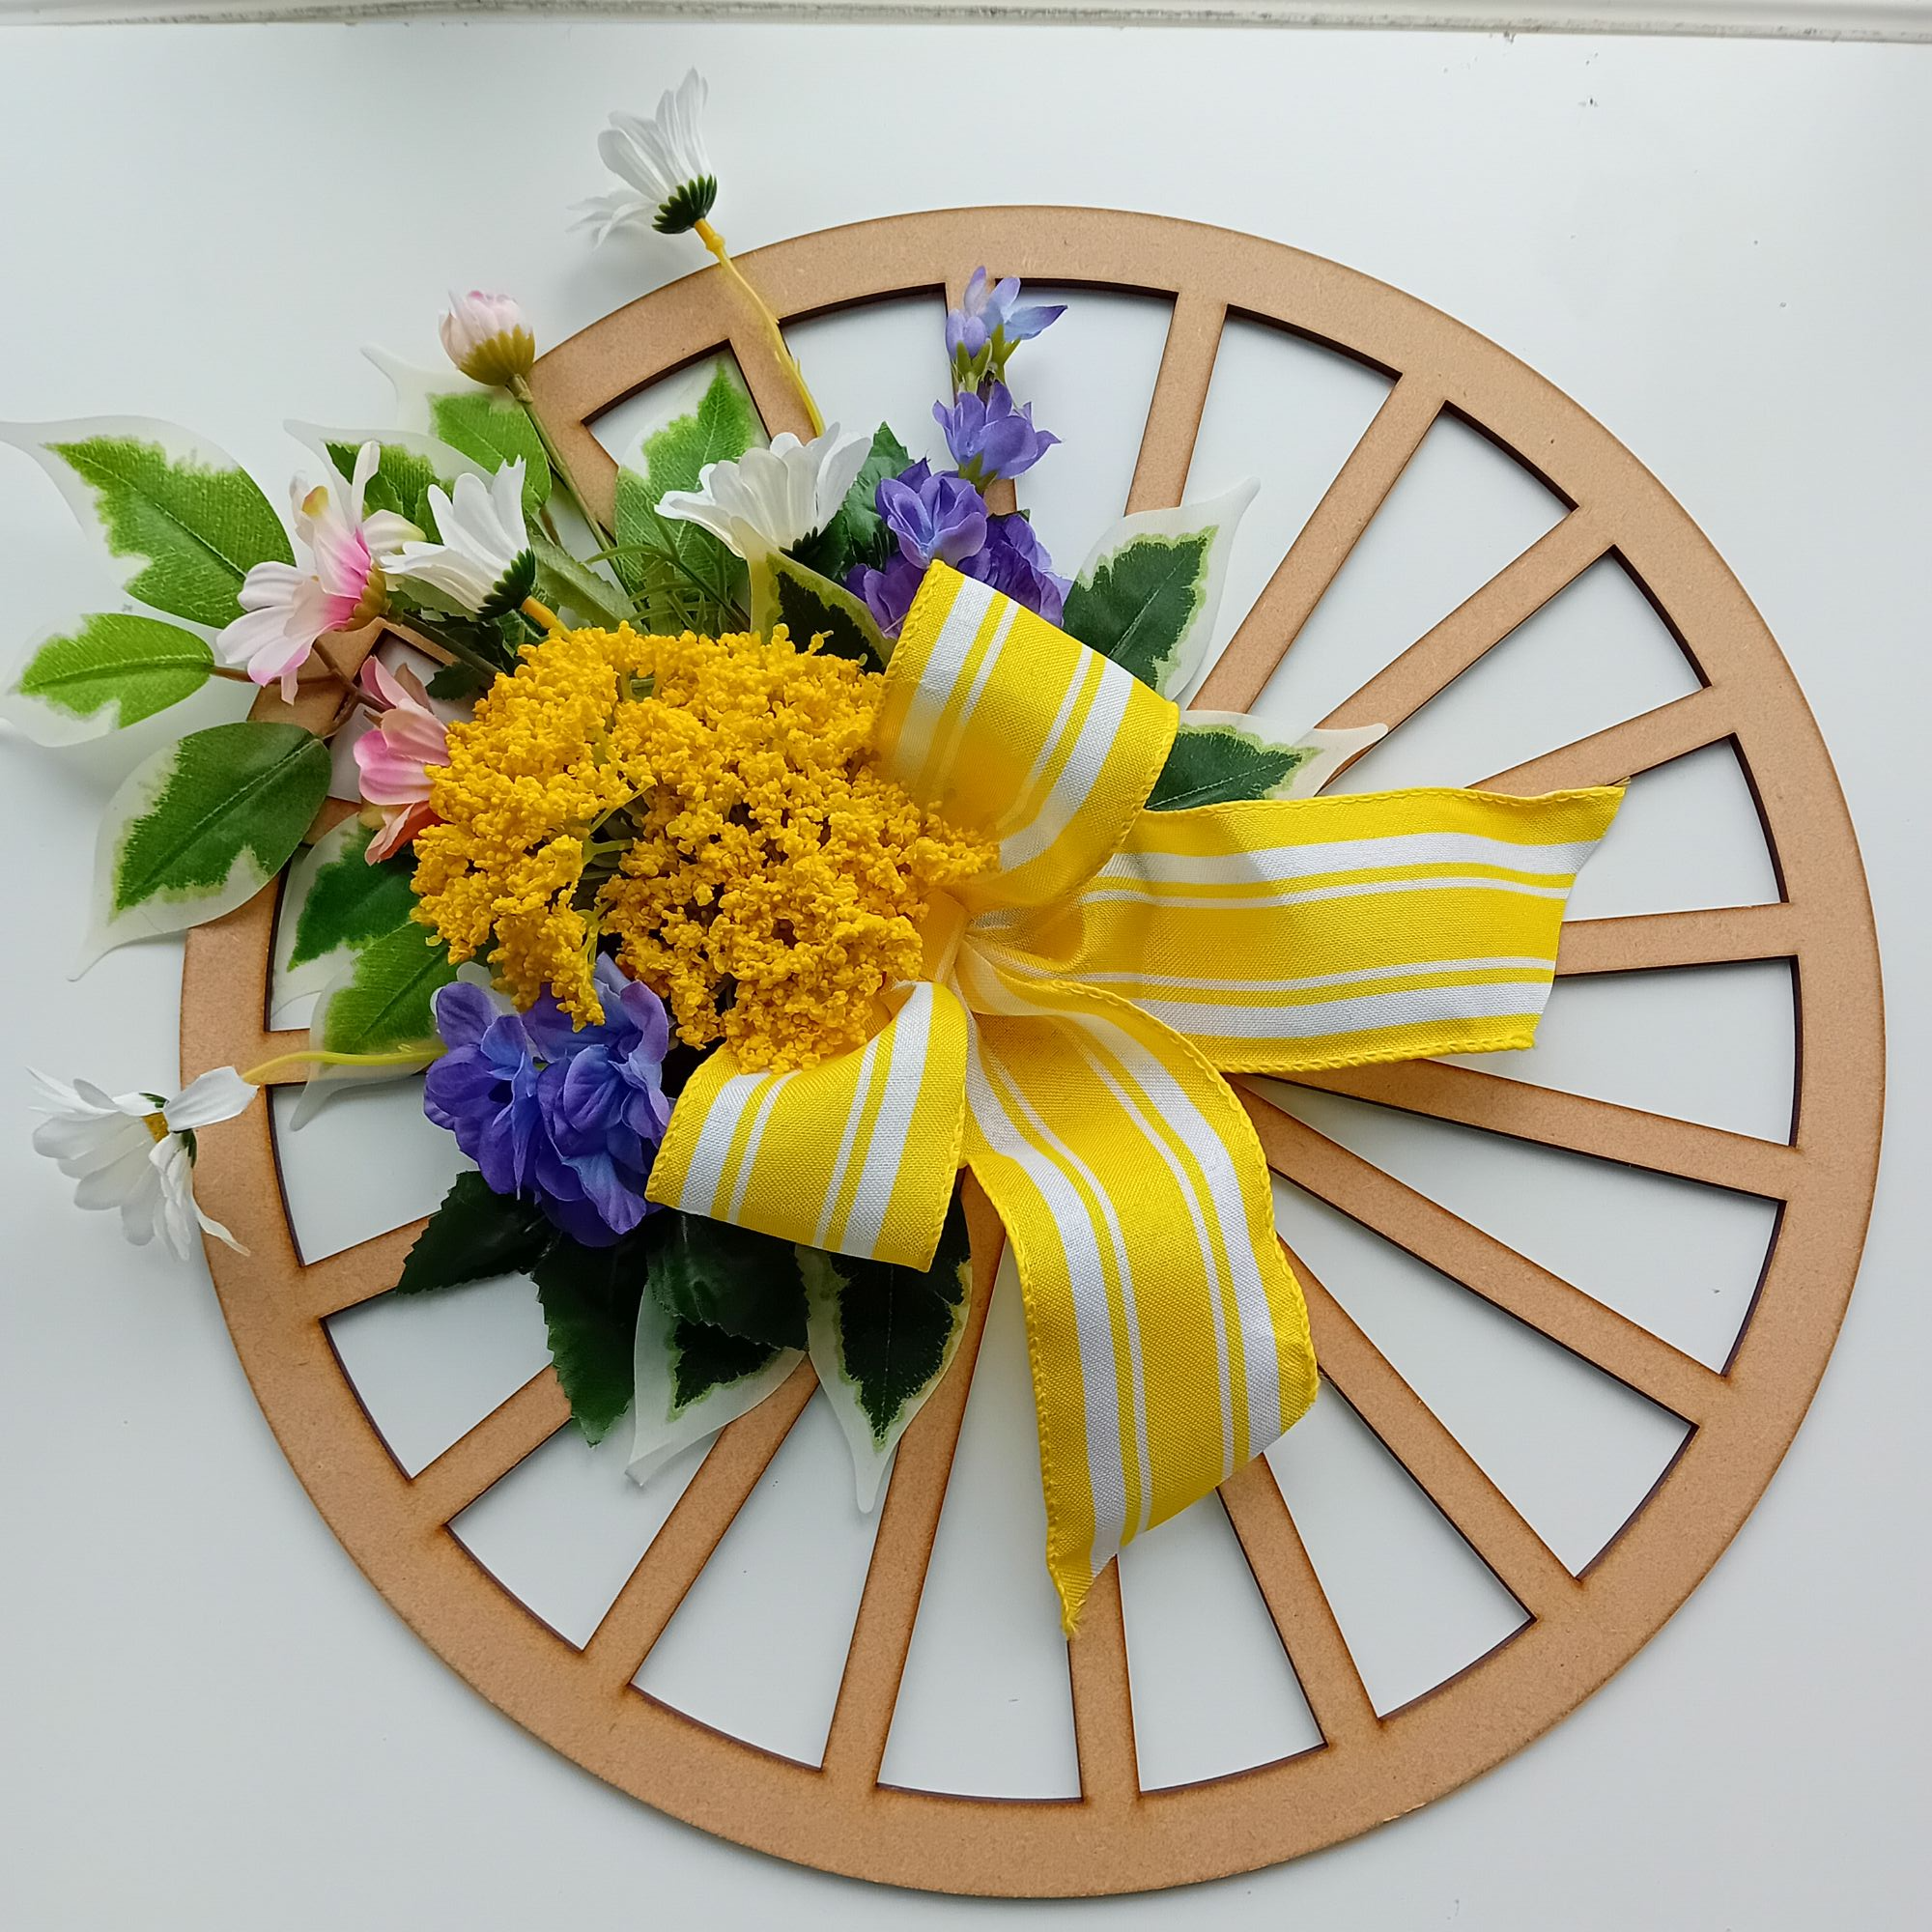 Flower wheel